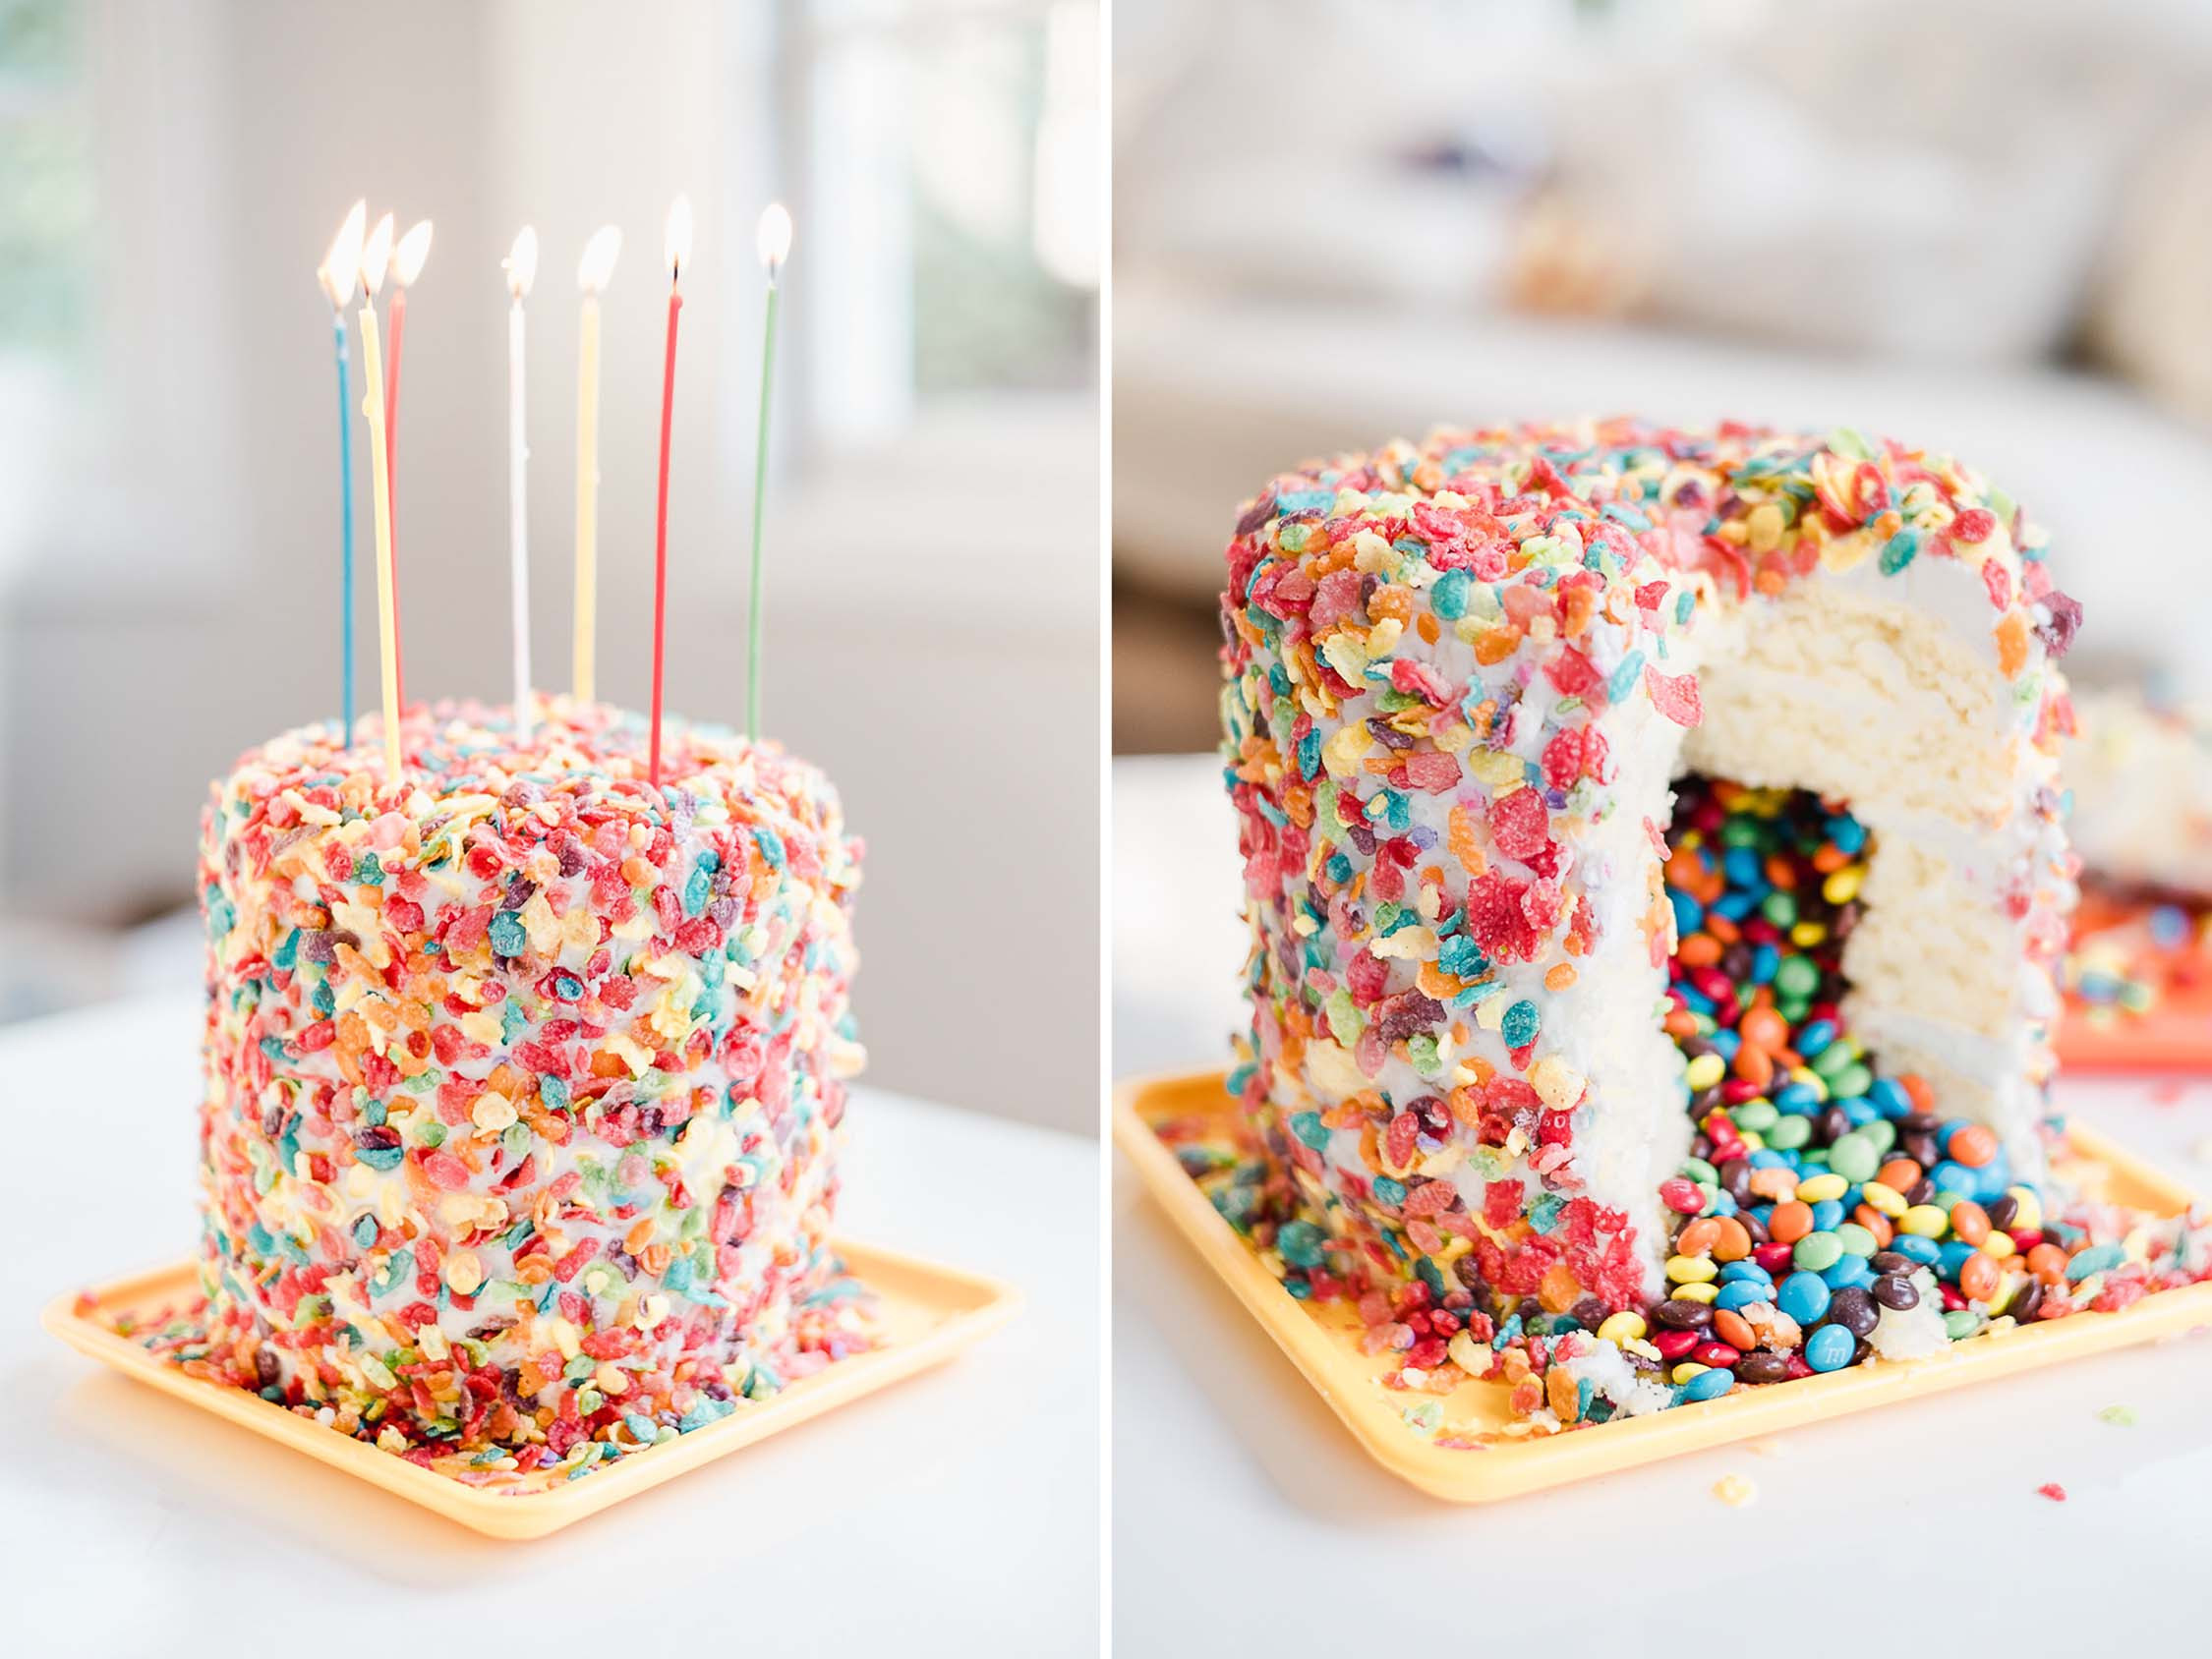 Best ideas about Diy Birthday Cake
. Save or Pin DIY Candy Surprise Inside Birthday Cake Caroline Tran Now.